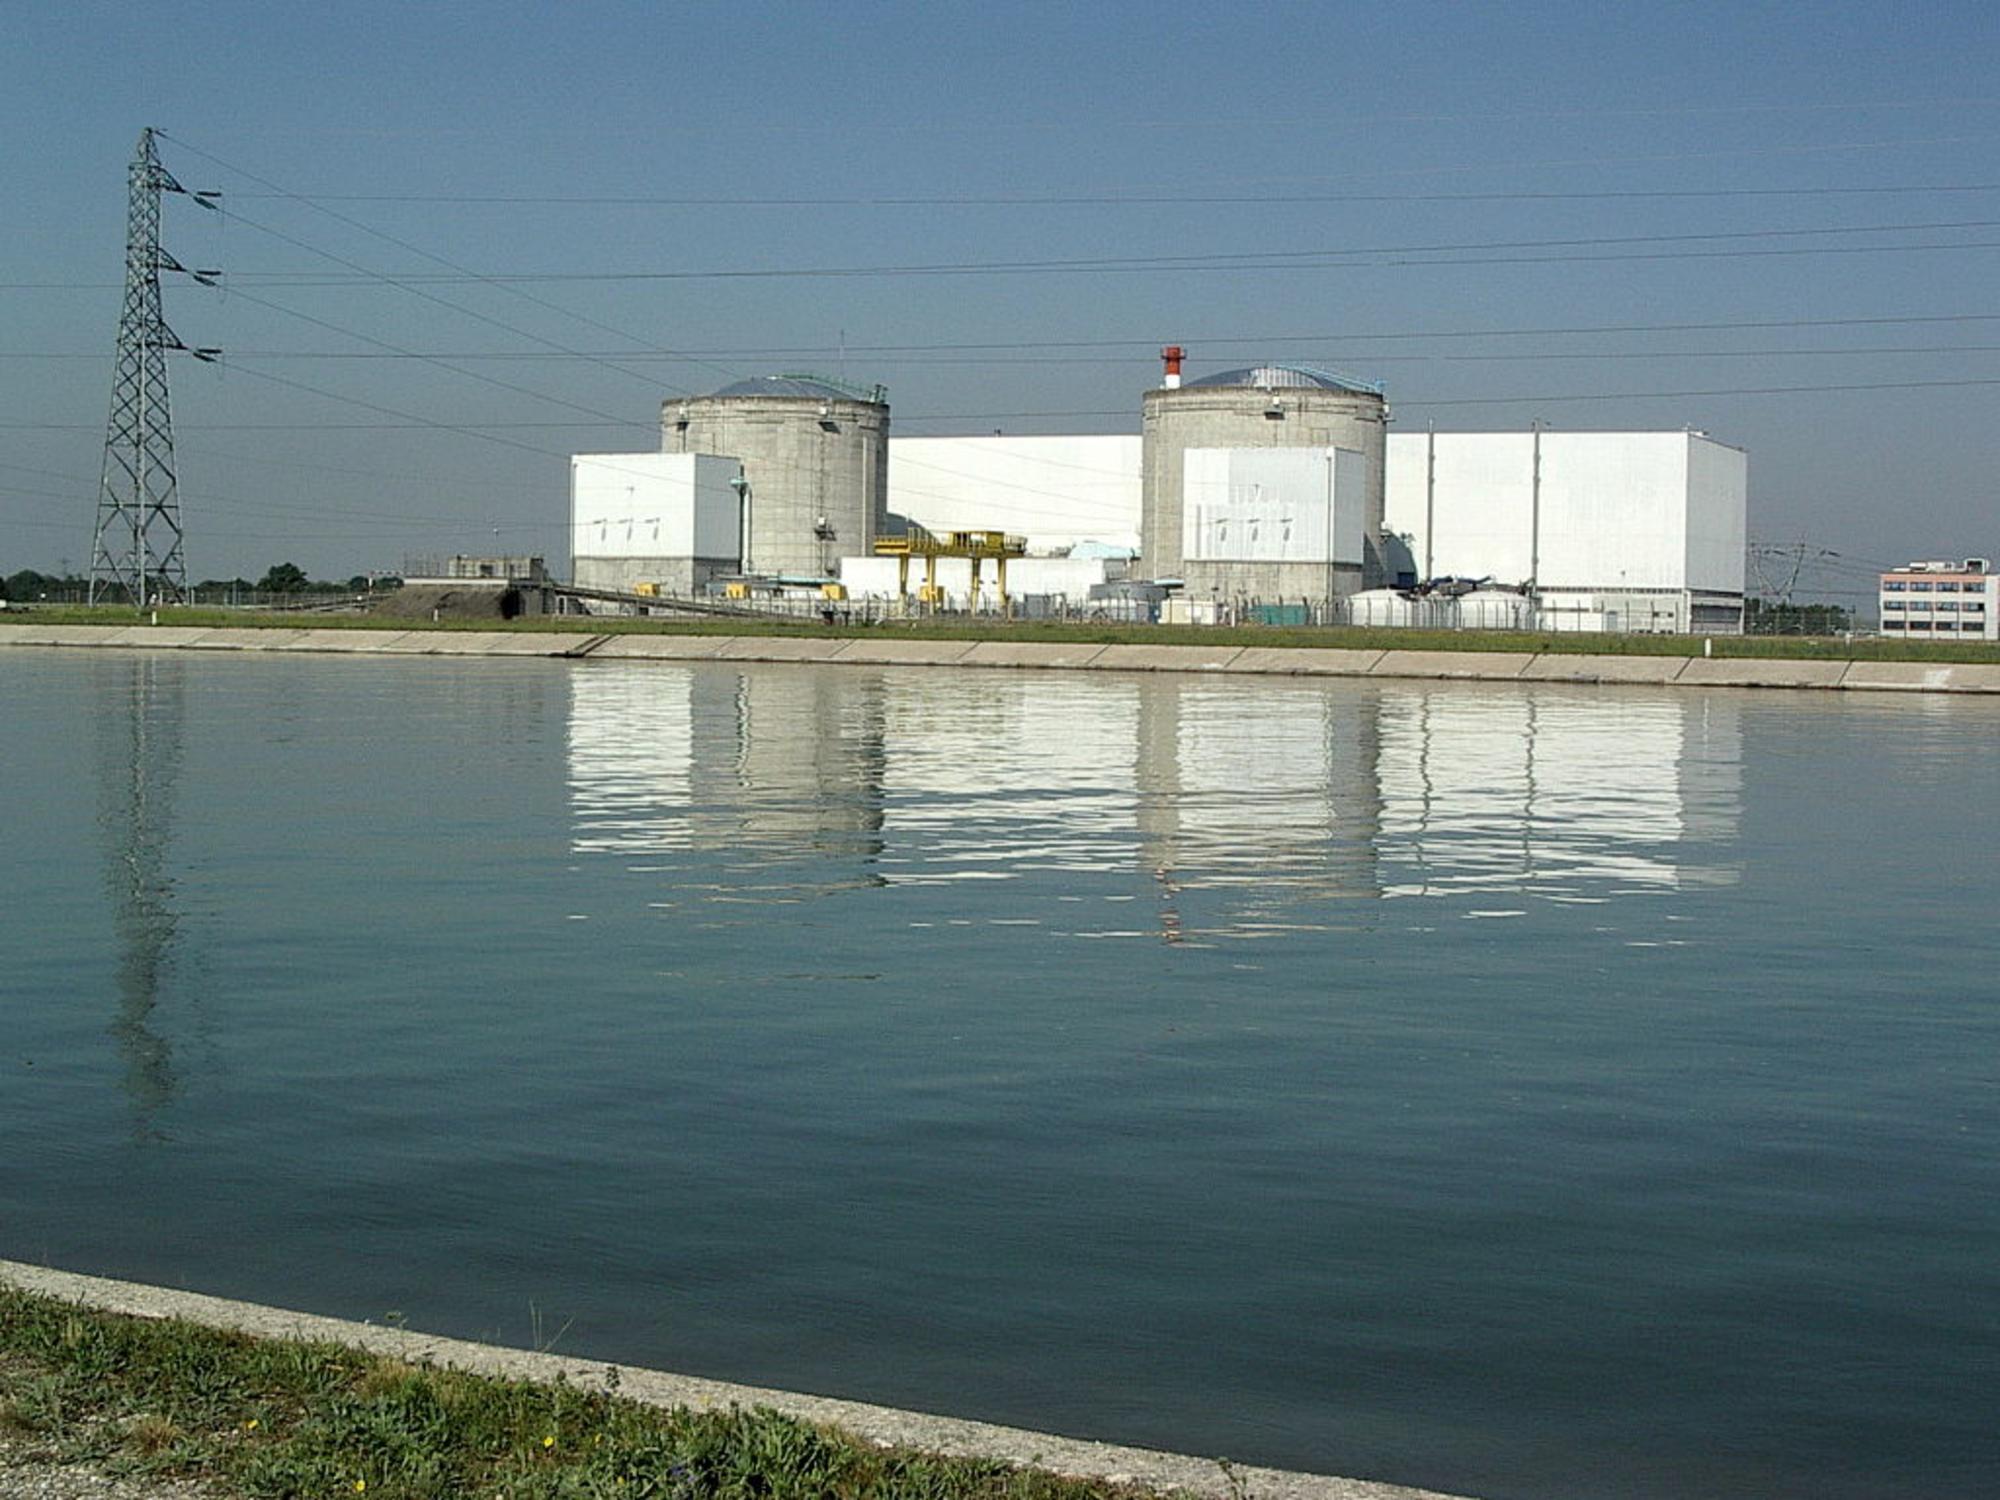 Los dos reactores de la central nuclear de Fessenheim, Francia, junto a un canal. Fuente: Beyond Nuclear International.